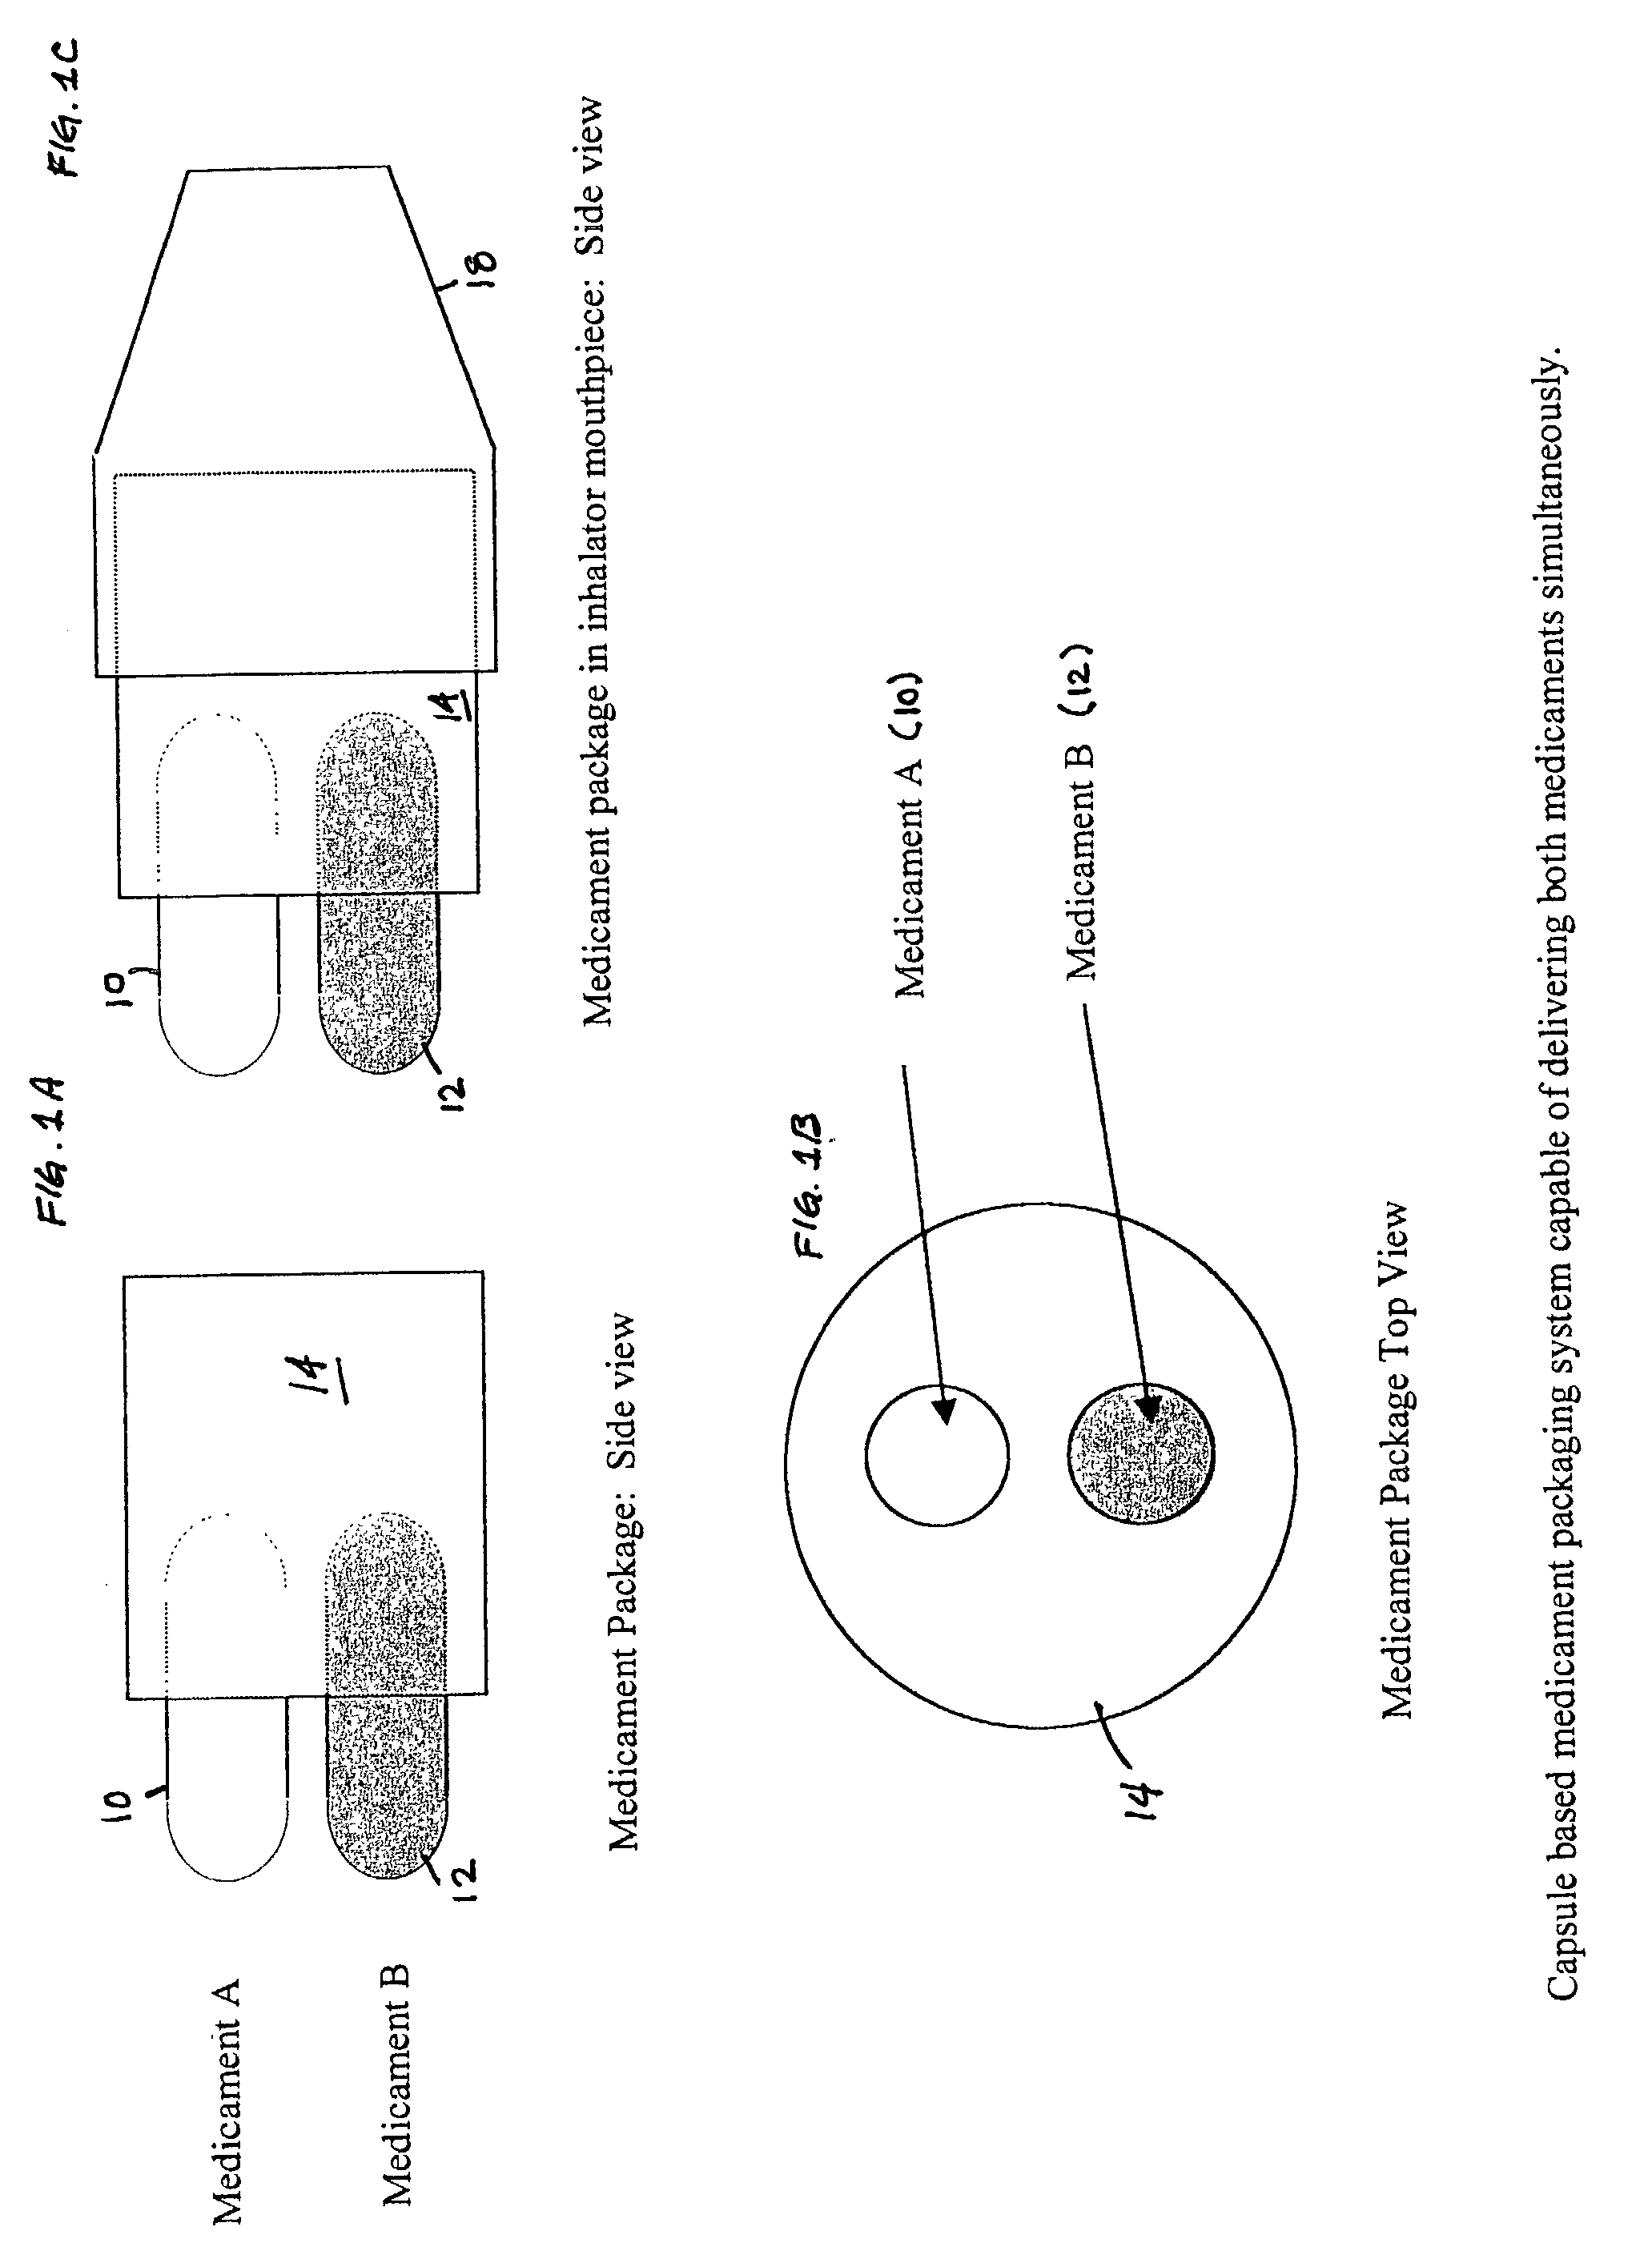 Method and apparatus for dispensing inhalator medicament